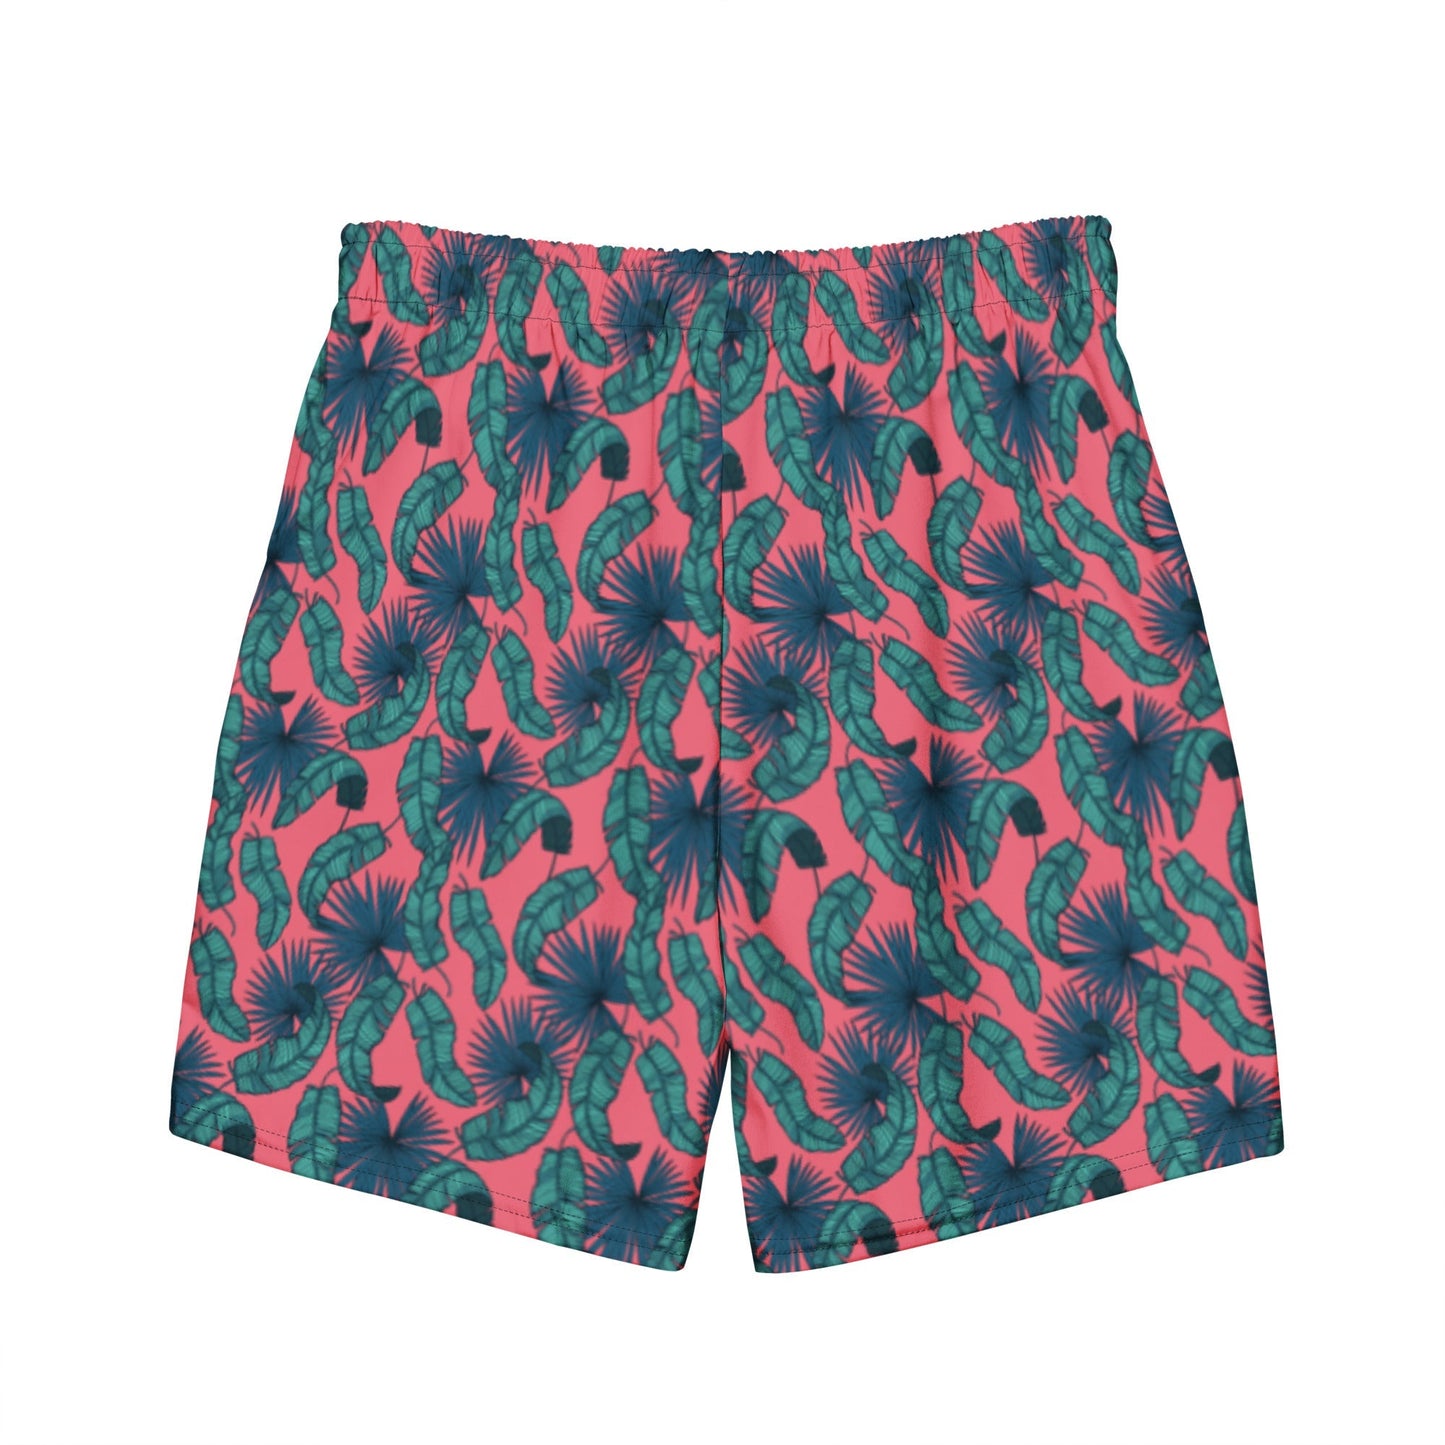 Men's Tropical Flamingo Palms Board Shorts - Tropical Seas Clothing 